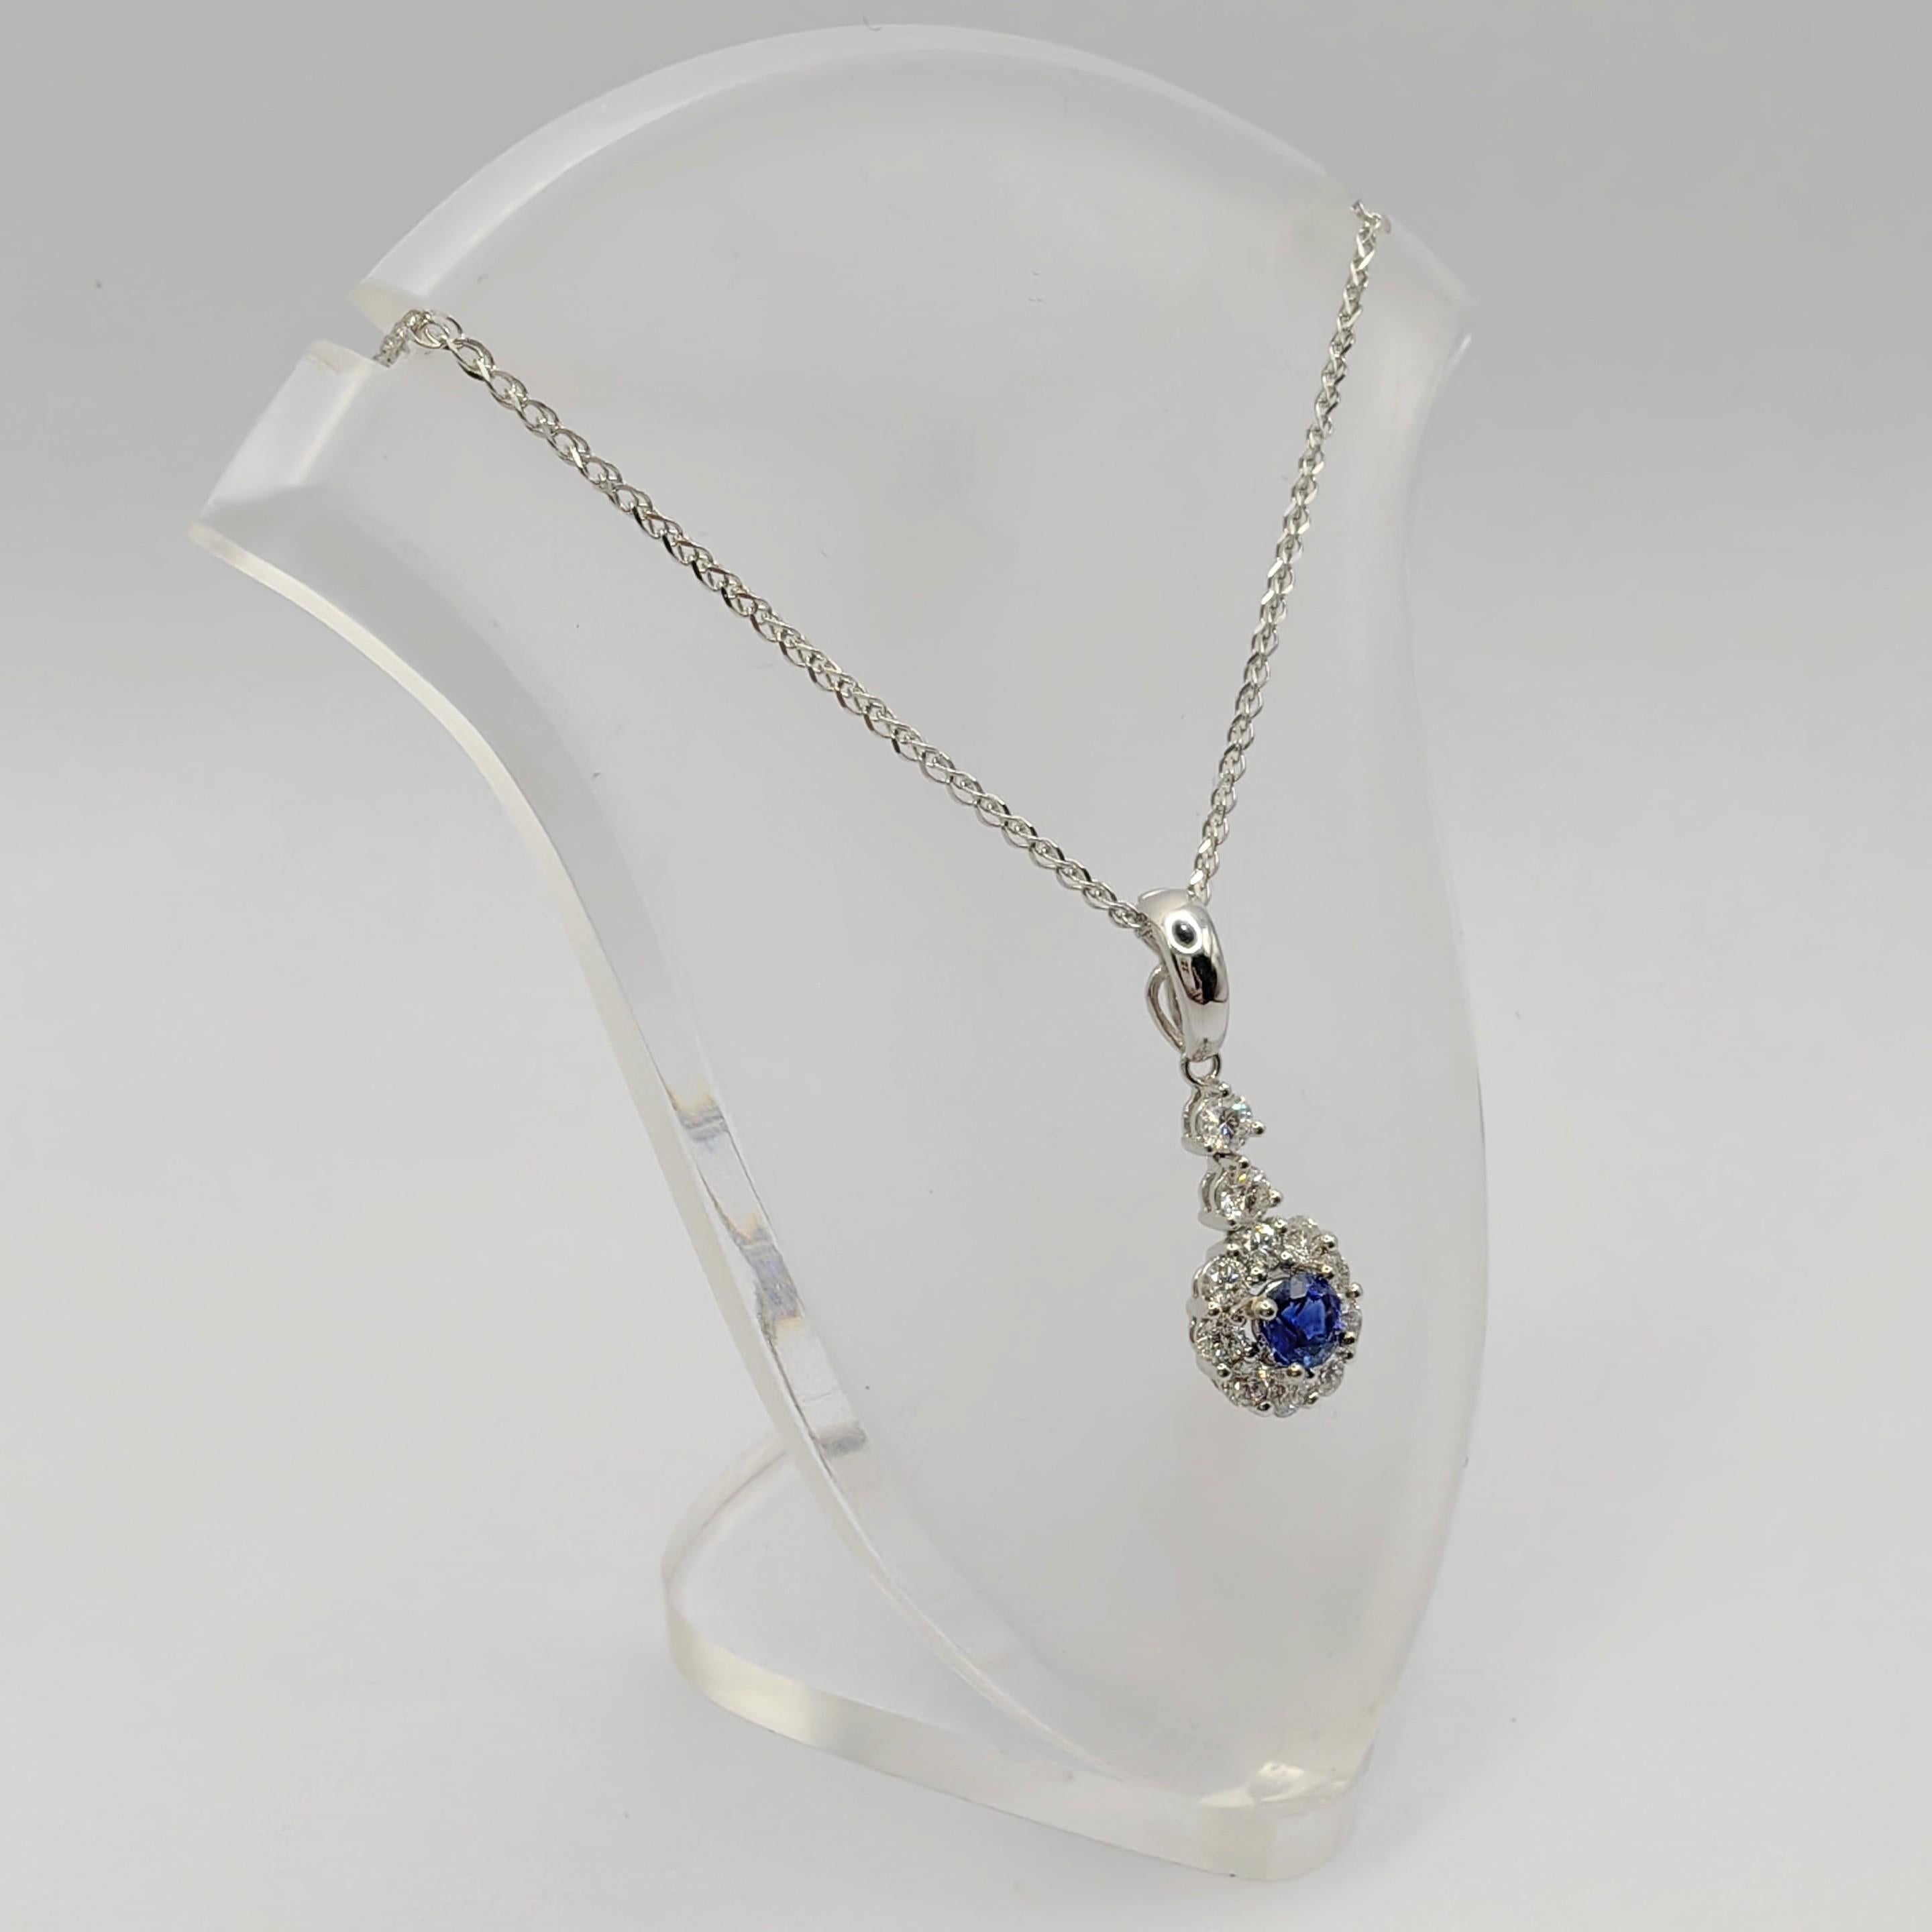 Contemporary Round-cut Blue Sapphire Diamond Halo Necklace Pendant in 18K White Gold